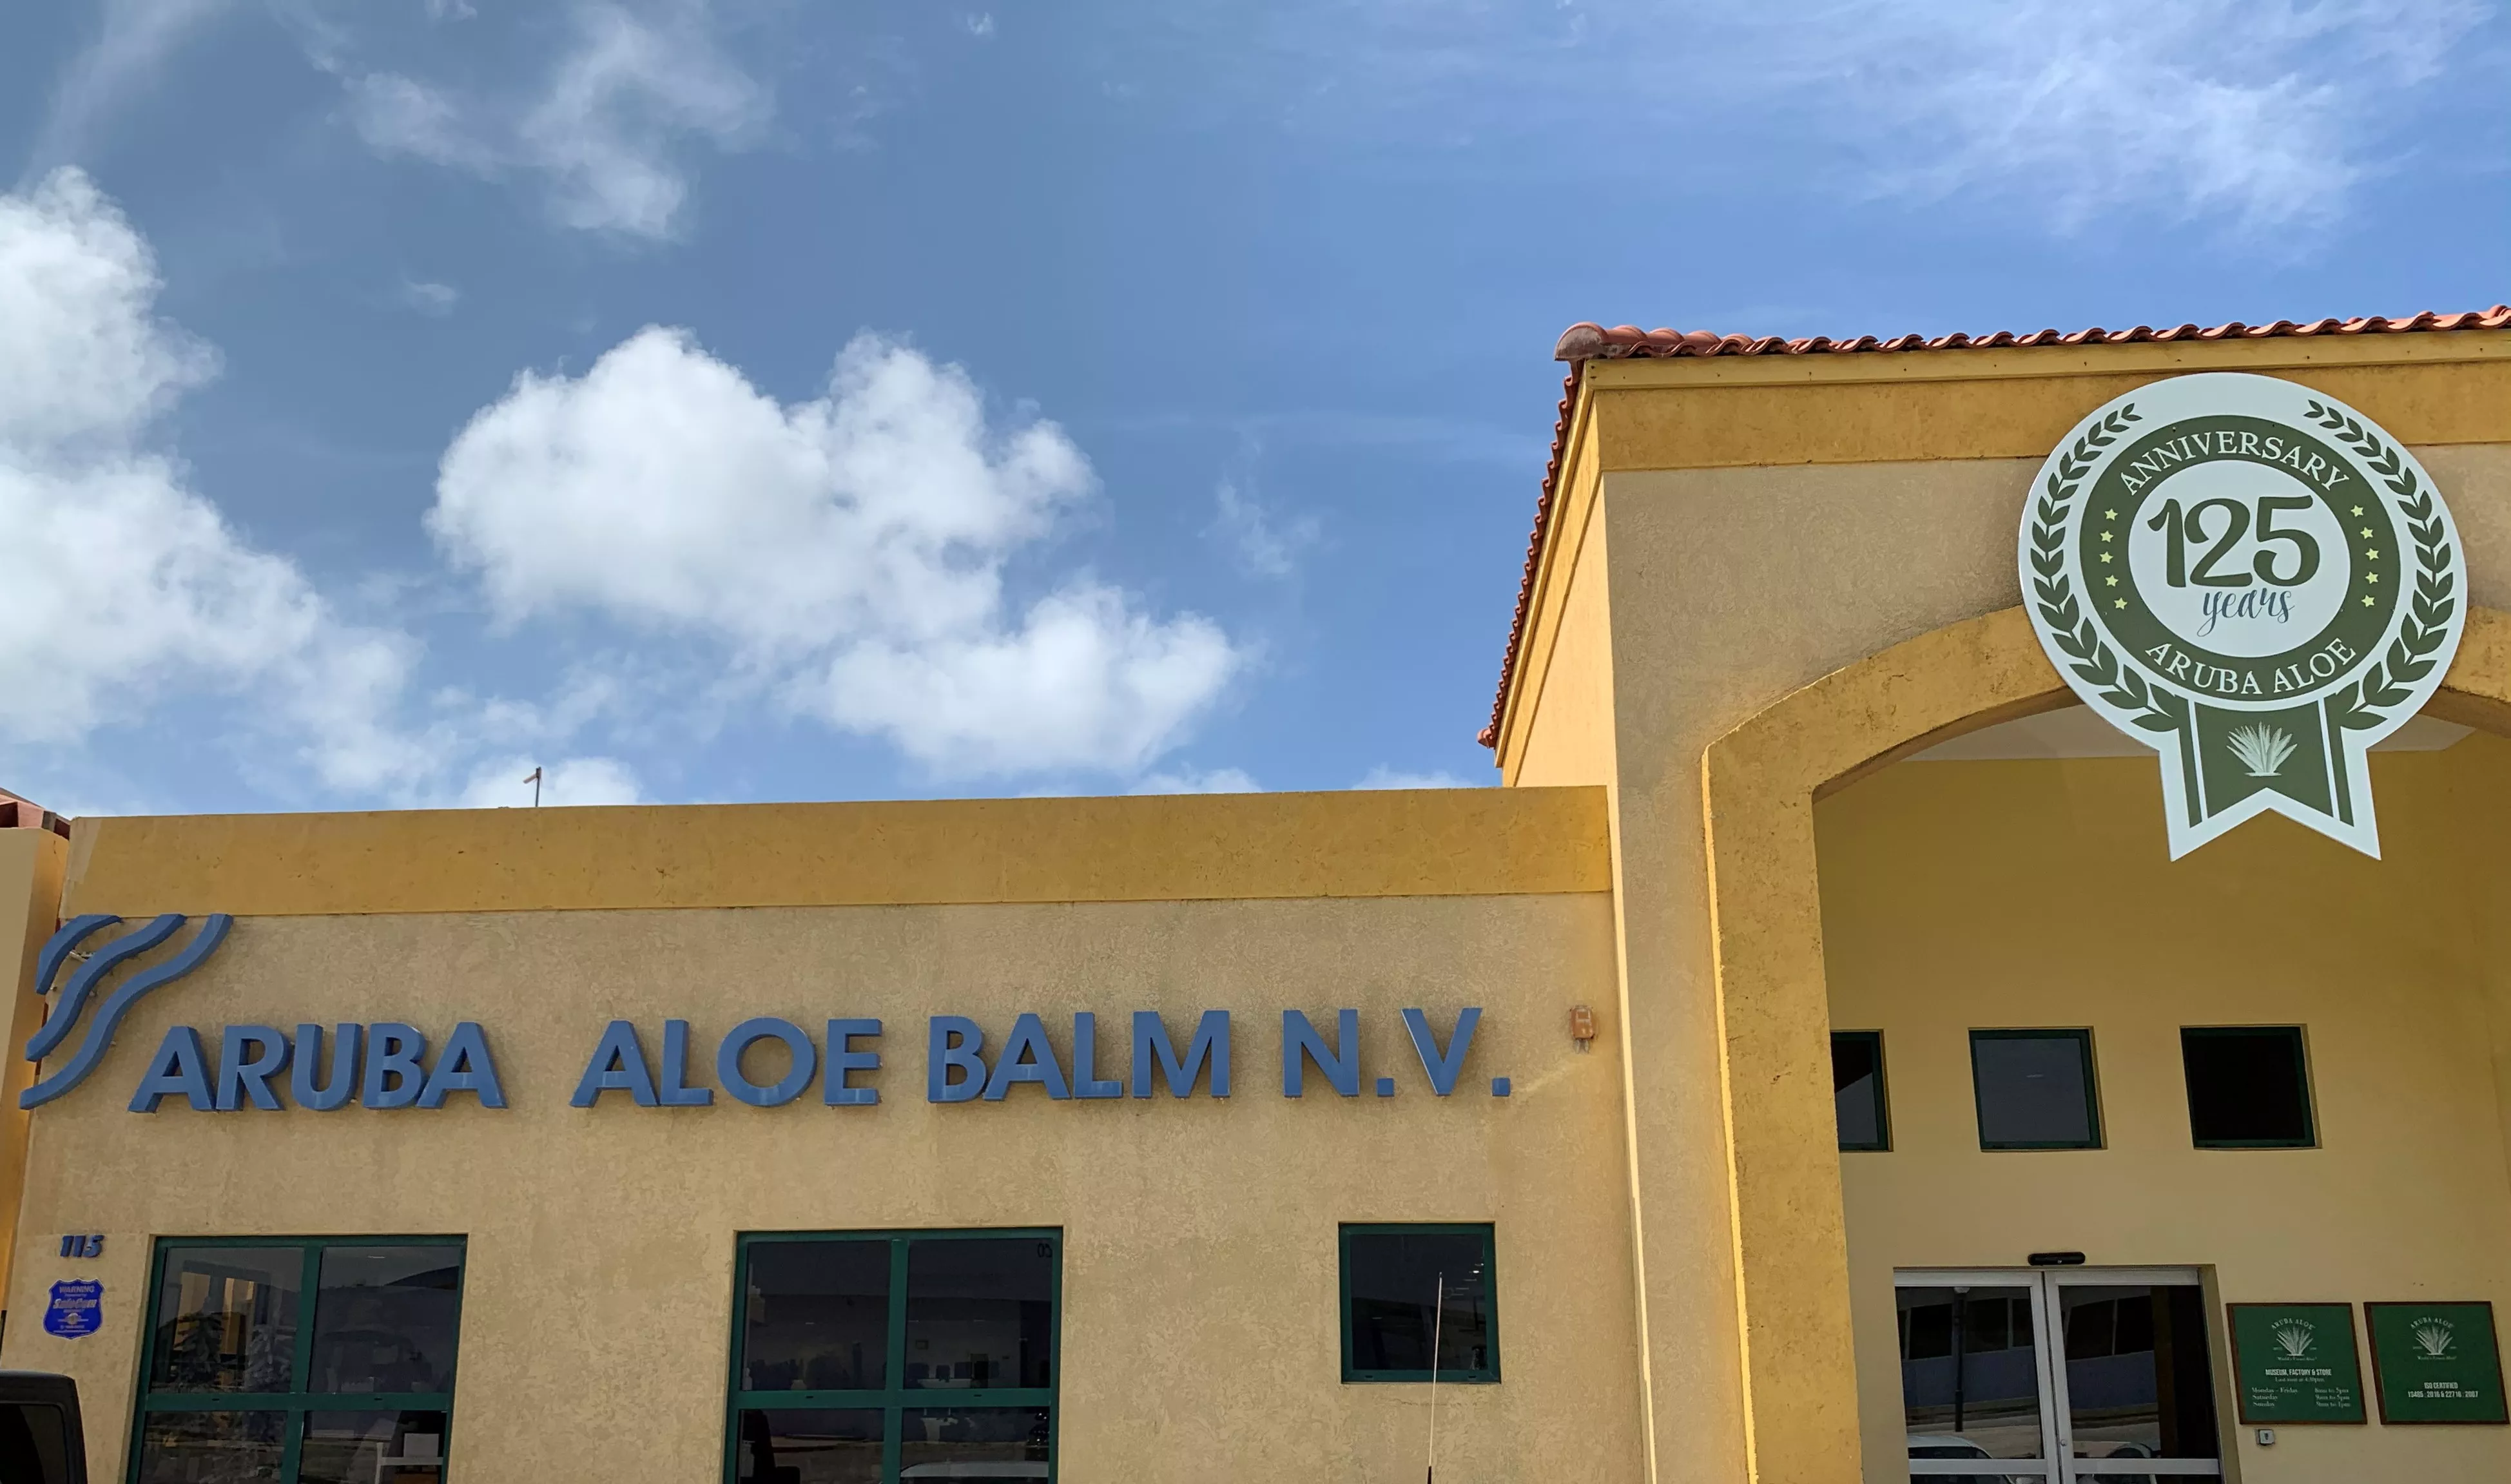 Aruba Aloe Factory in Aruba, Caribbean | Museums - Rated 3.7